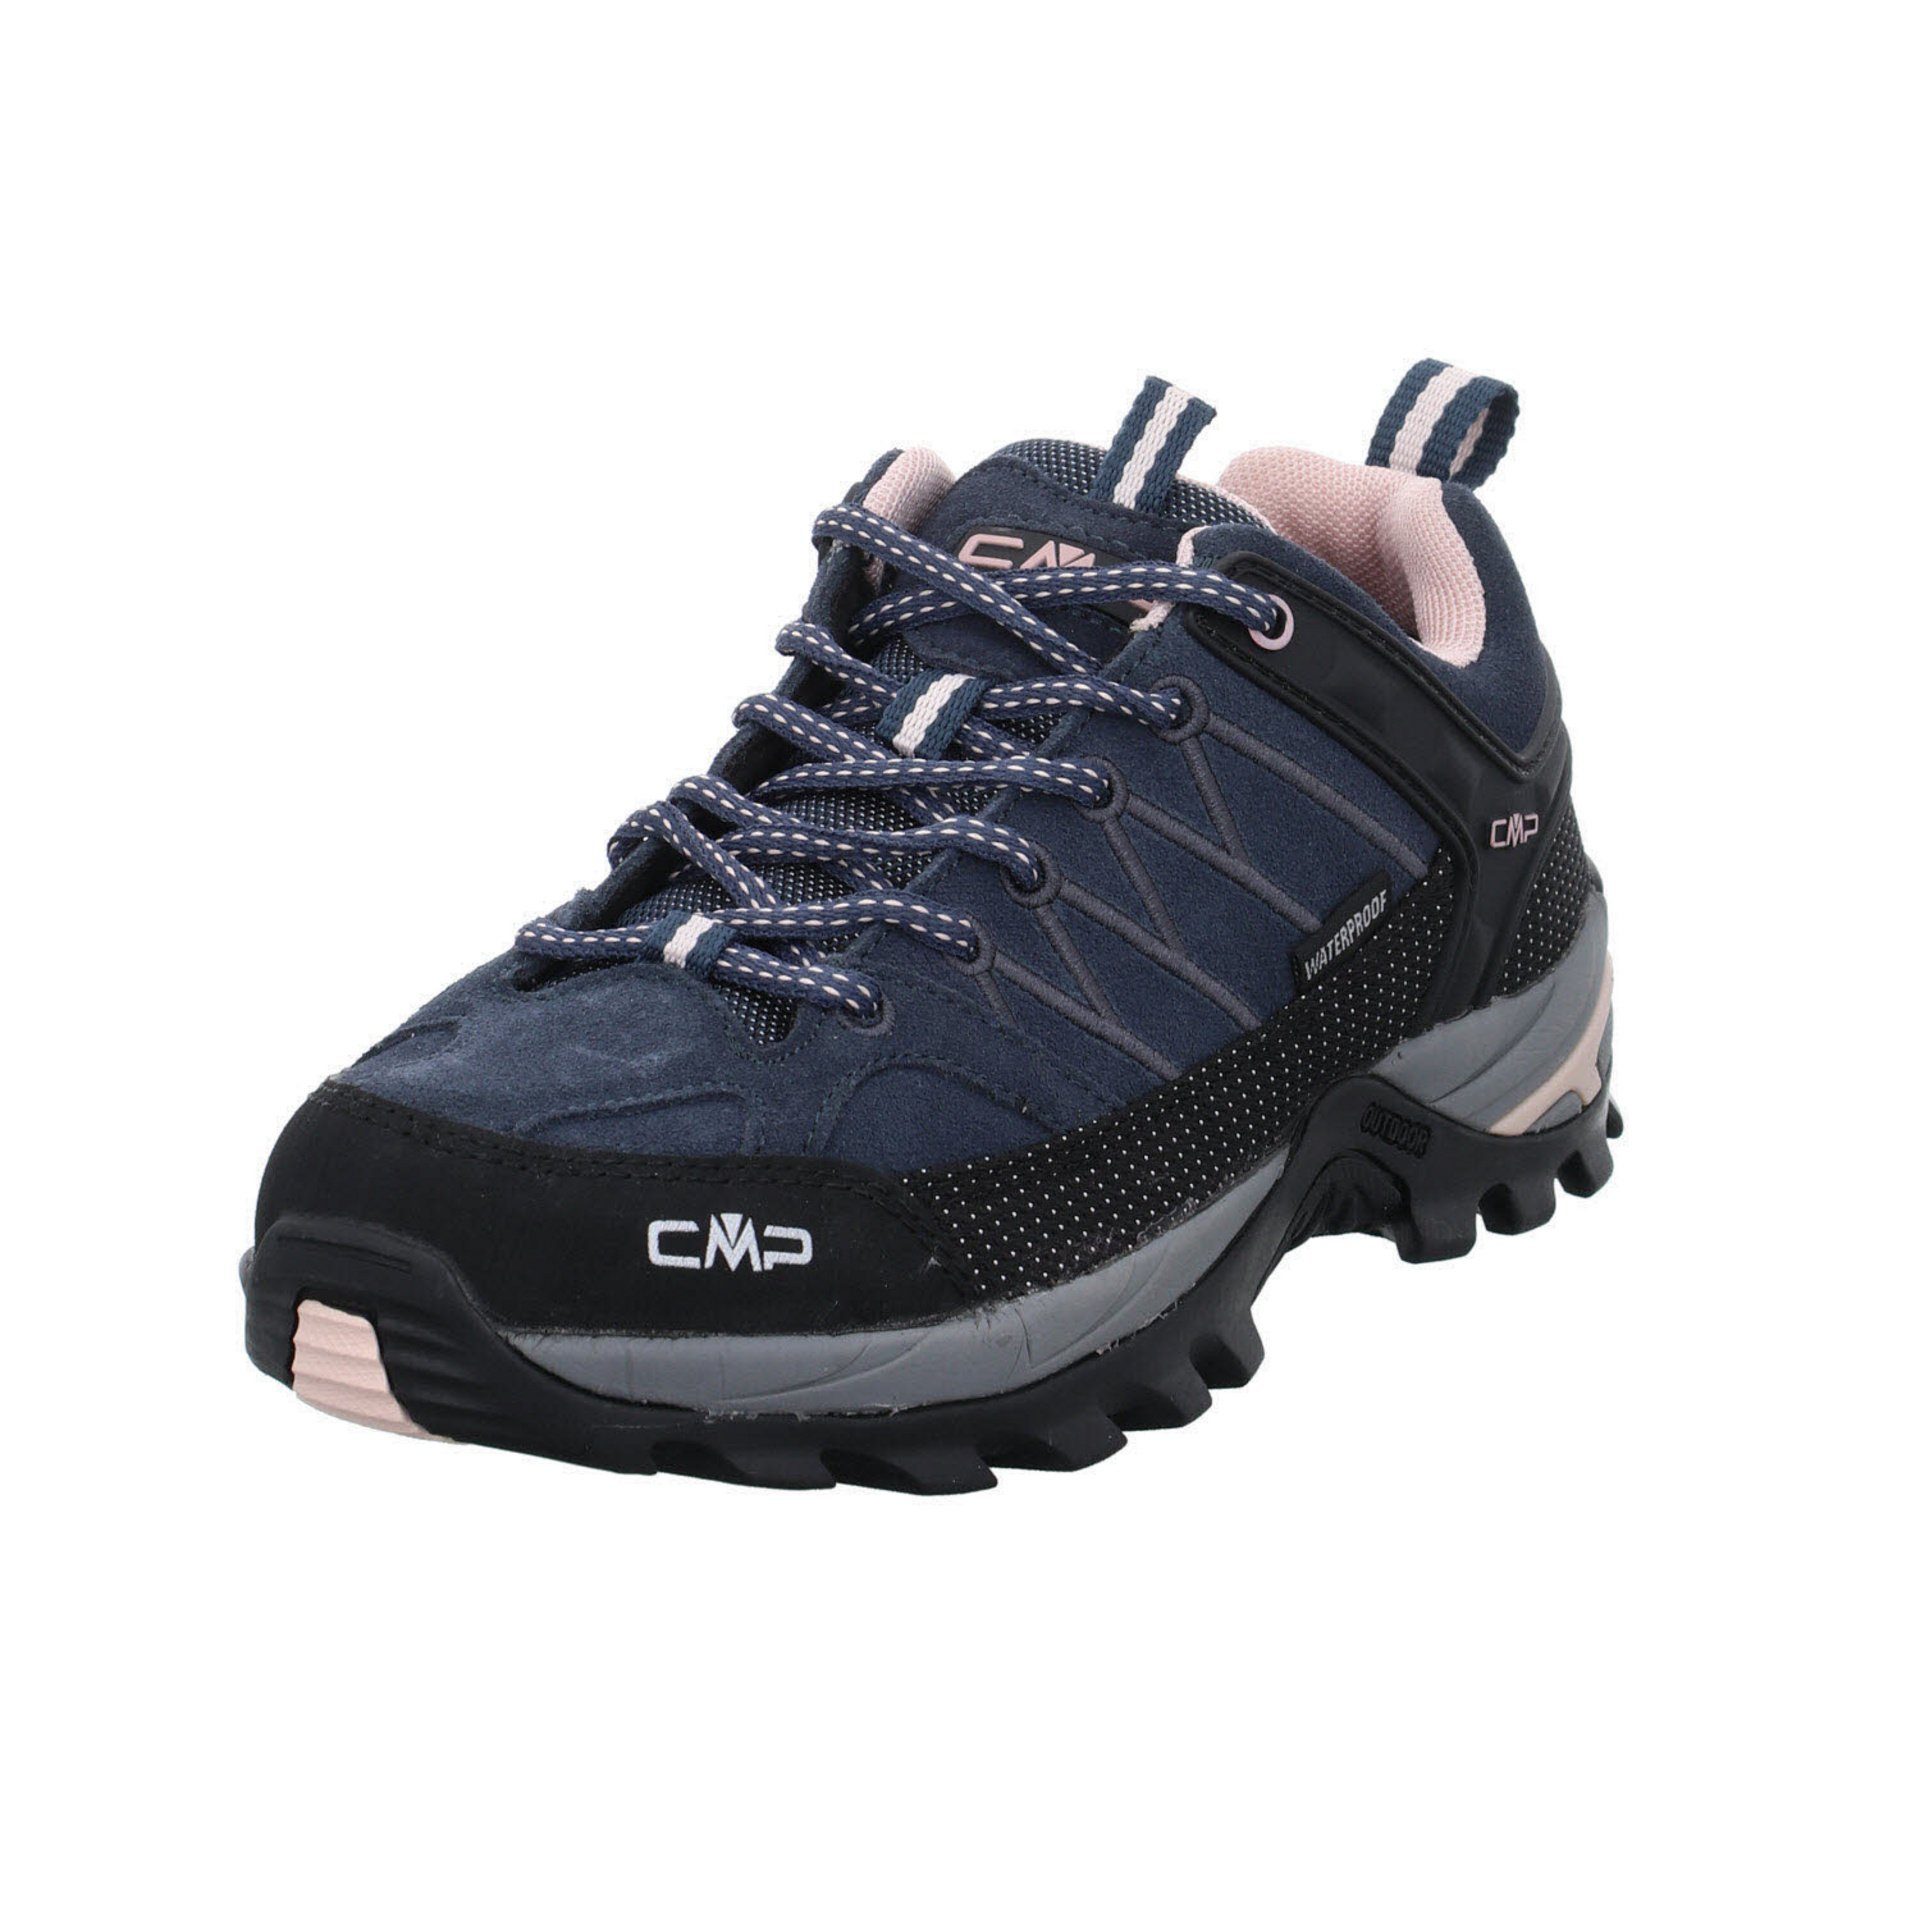 Low Riegel Damen anthrazit CMP Schuhe Outdoorschuh (201) Outdoorschuh Outdoor Leder-/Textilkombination